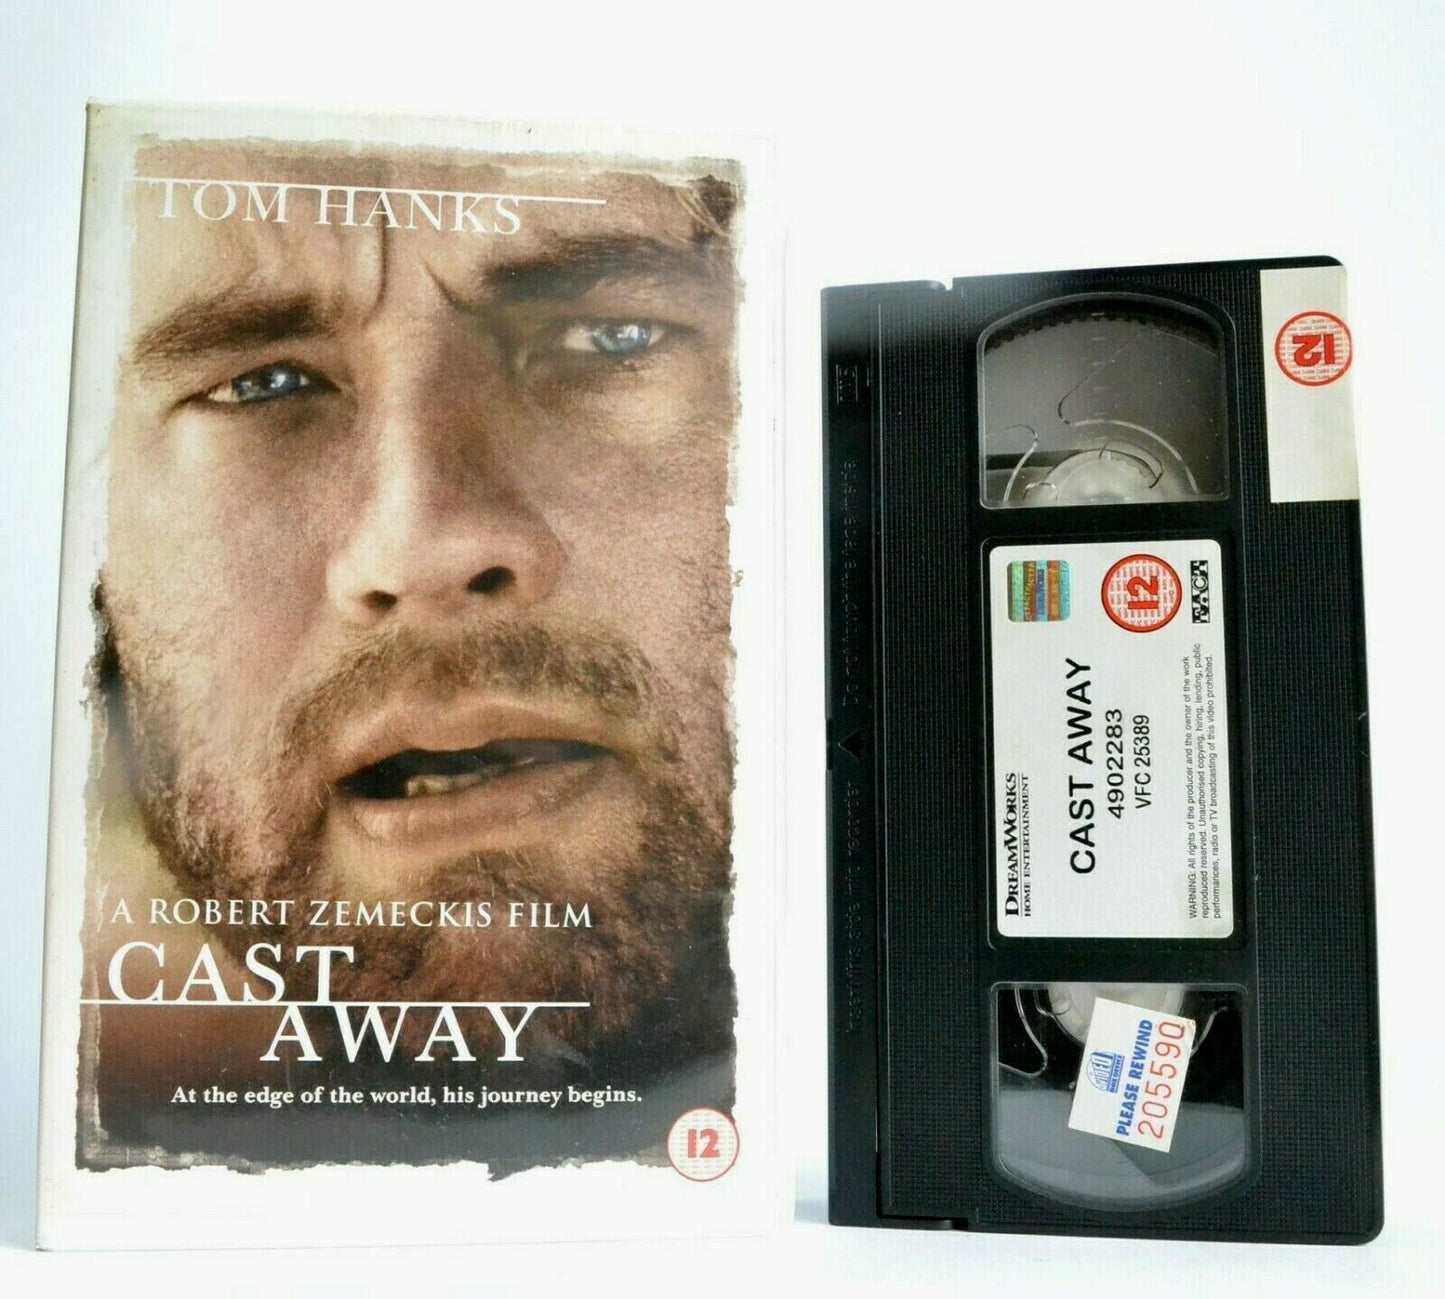 Cast Away (2000): A Robert Zemeckis Film - Survival Drama - Tom Hanks - Pal VHS-